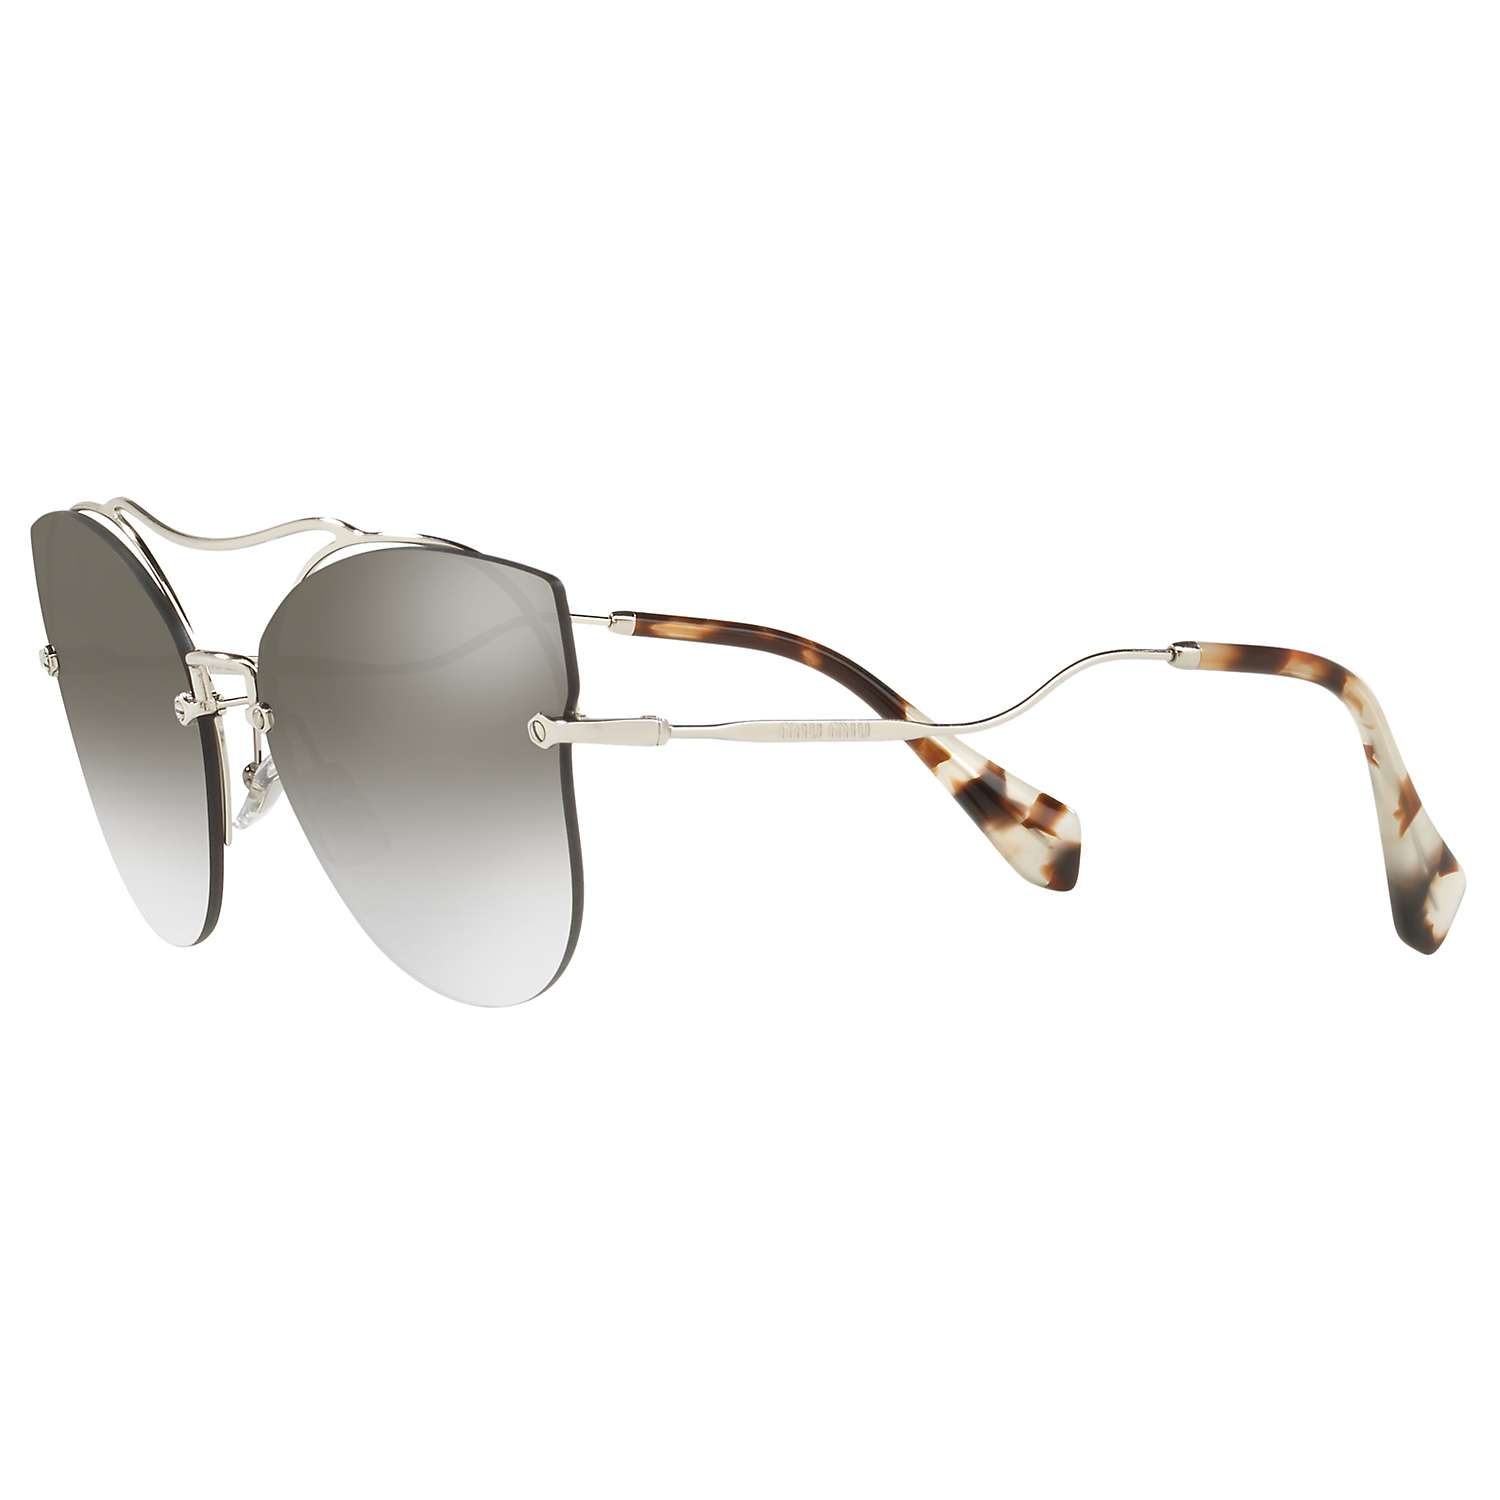 Buy Miu Miu MU 52SS Cat's Eye Sunglasses, Silver/Mirror Silver Online at johnlewis.com